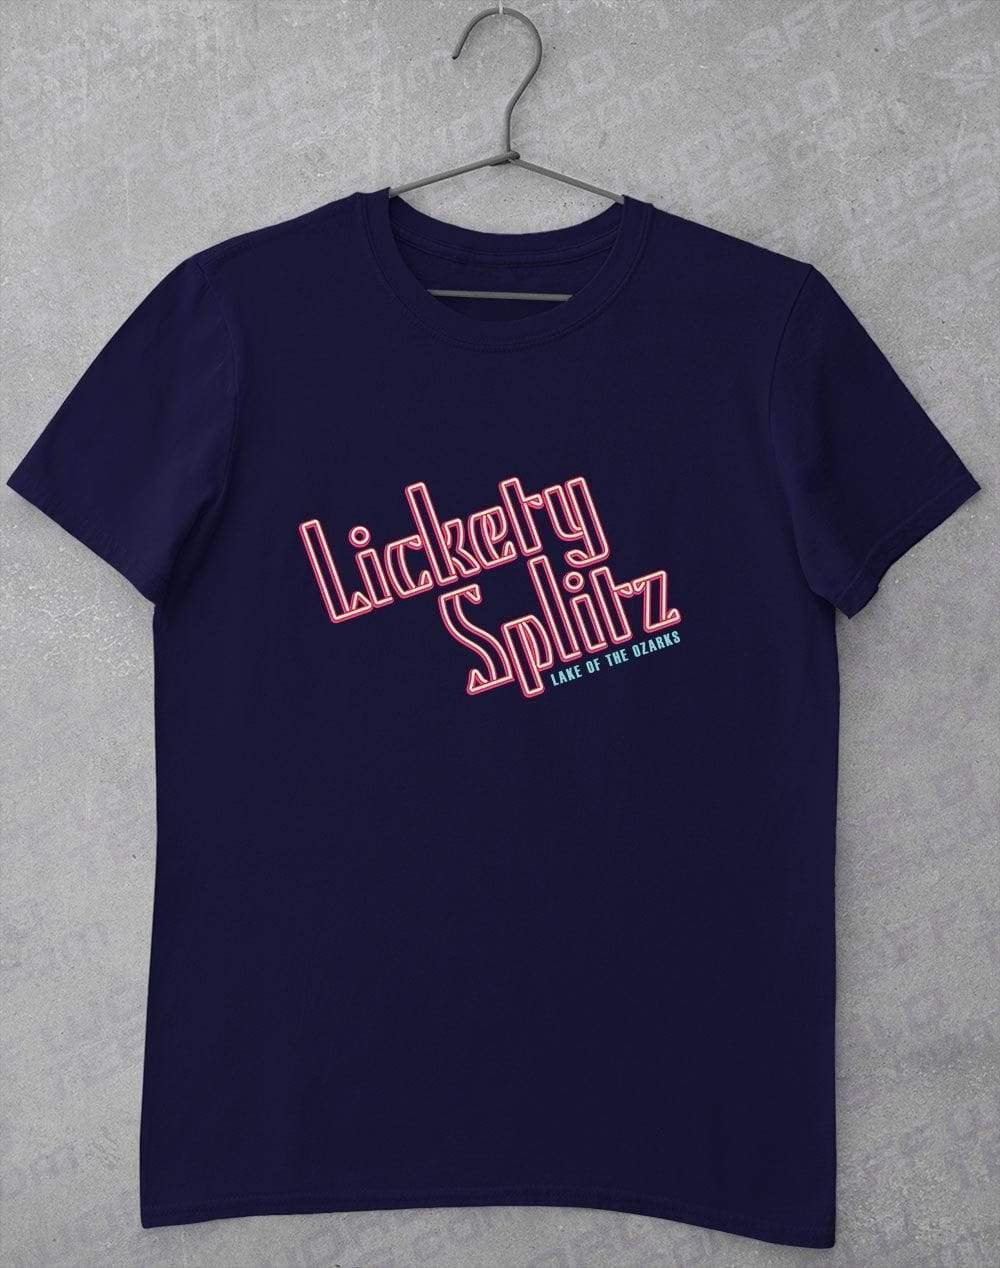 Lickety Splitz T-Shirt S / Navy  - Off World Tees